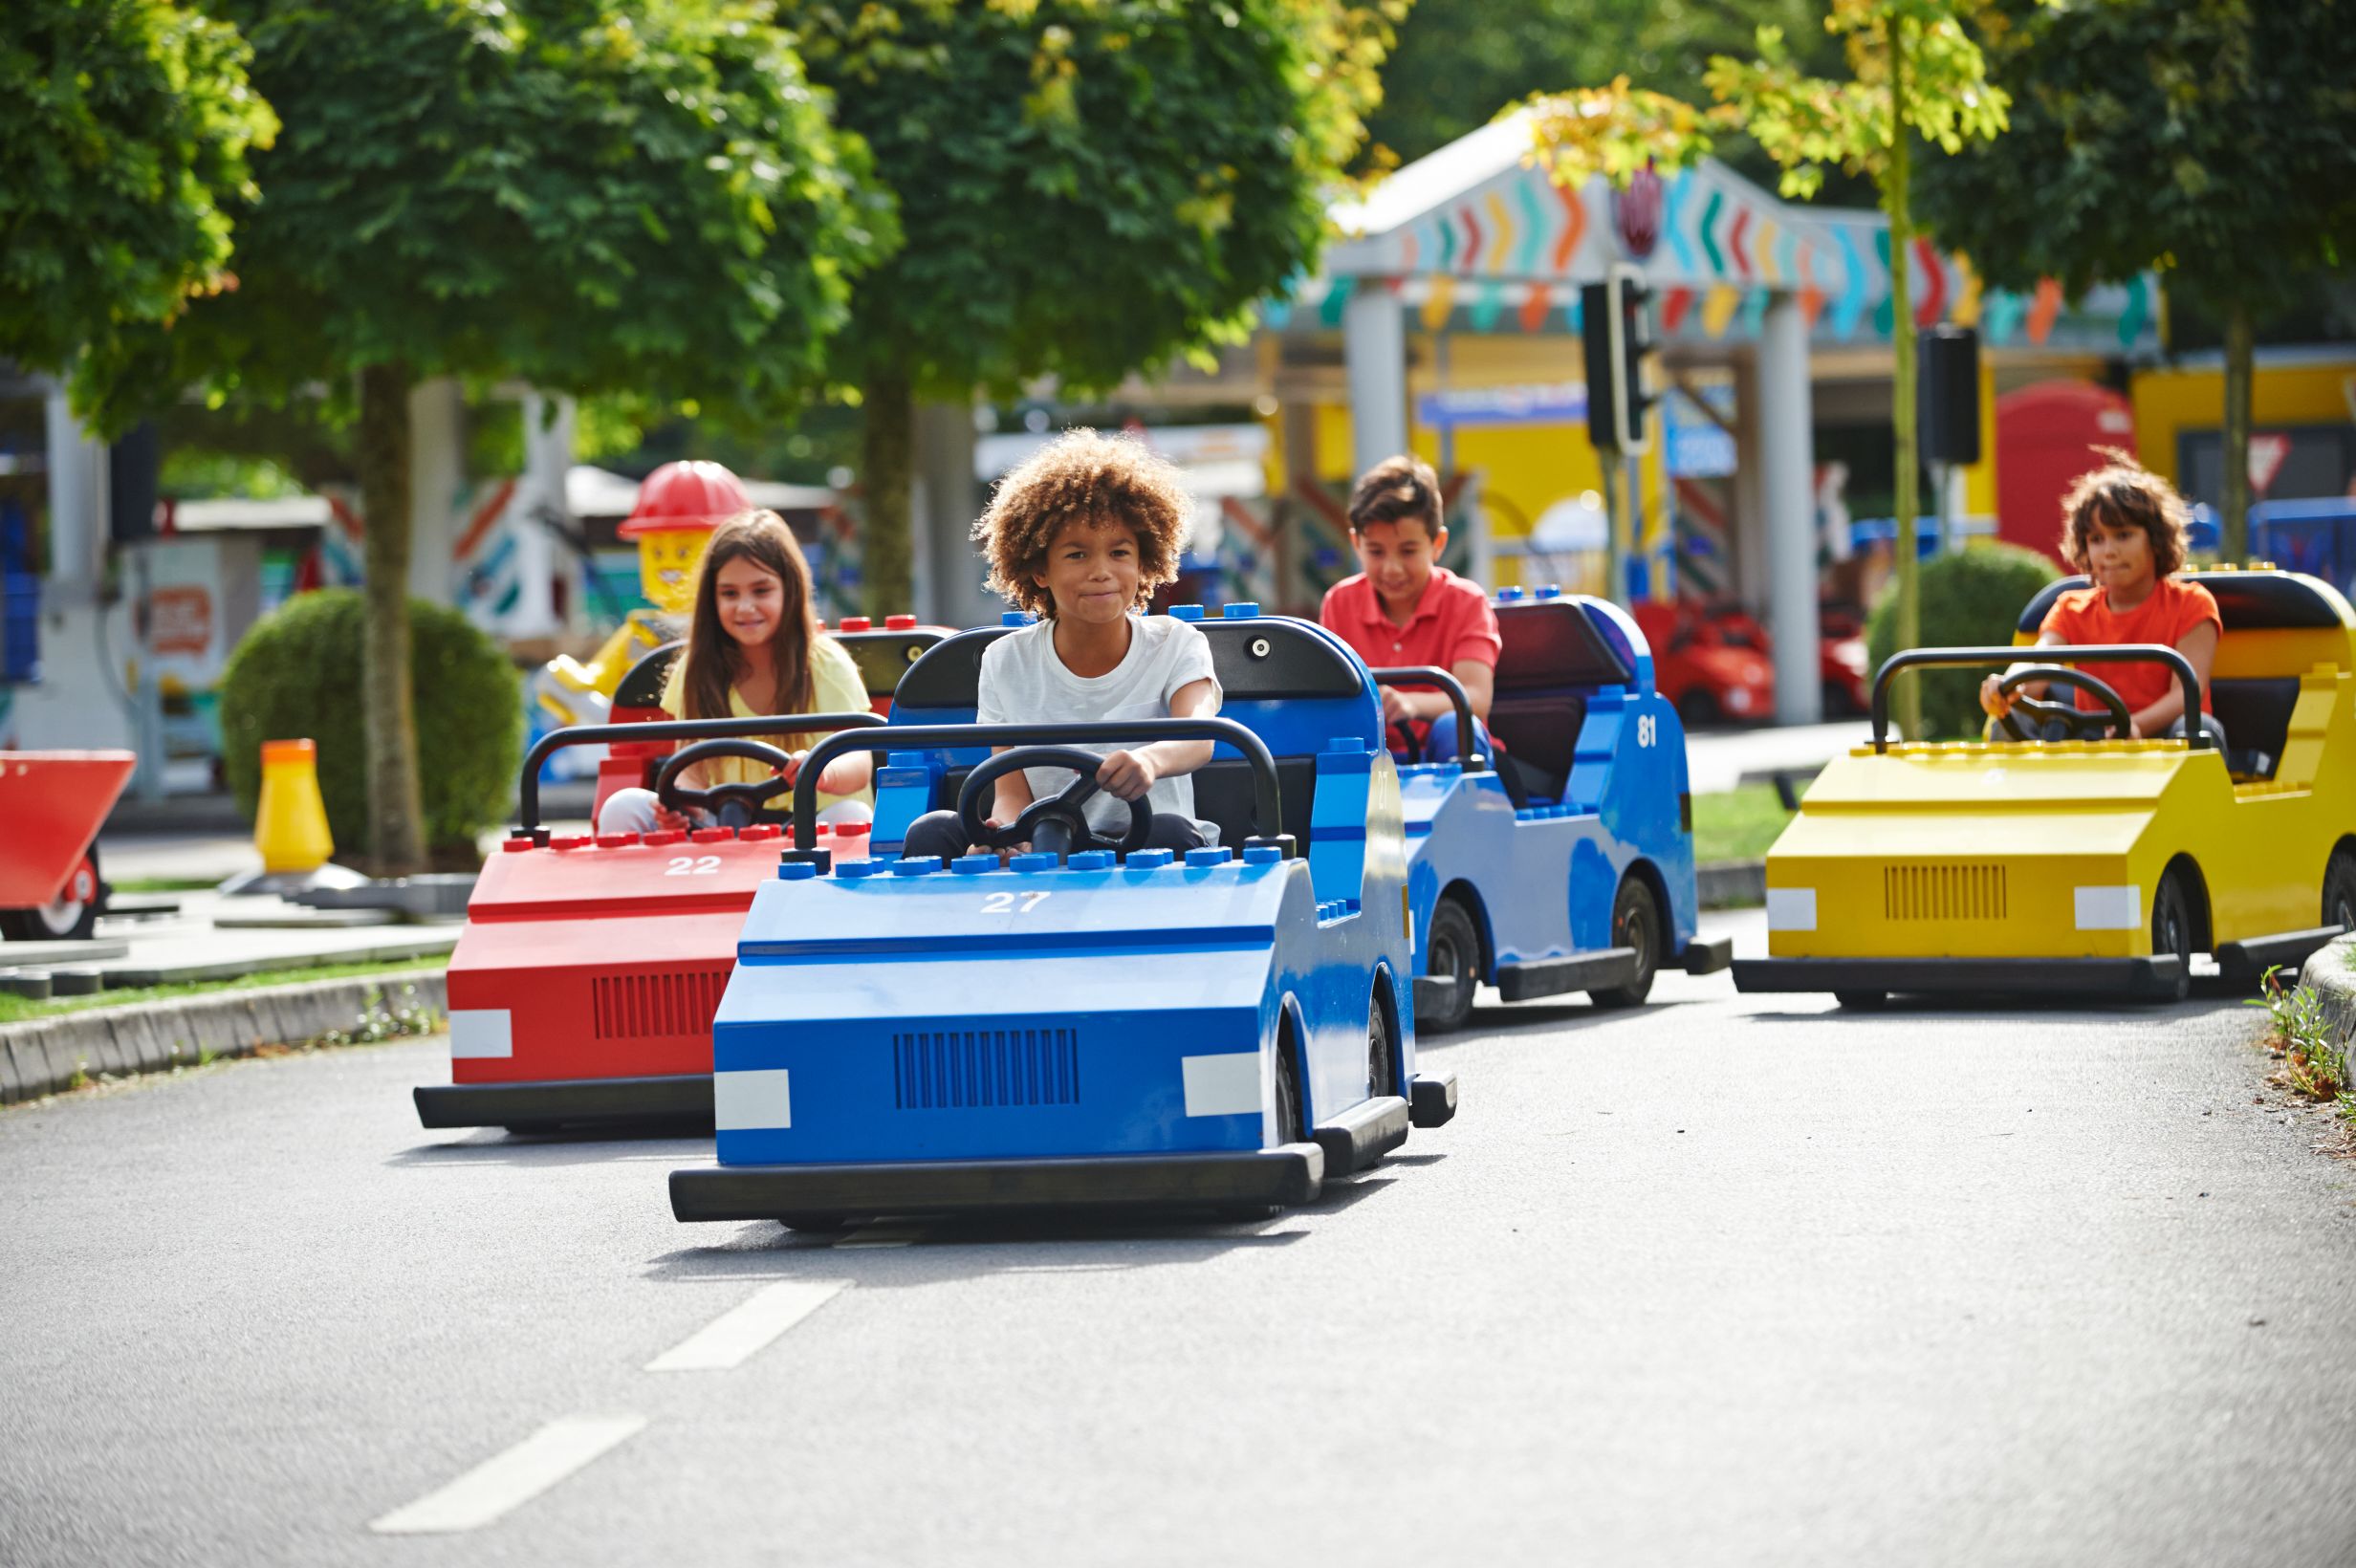 Legoland Electric Car Charging